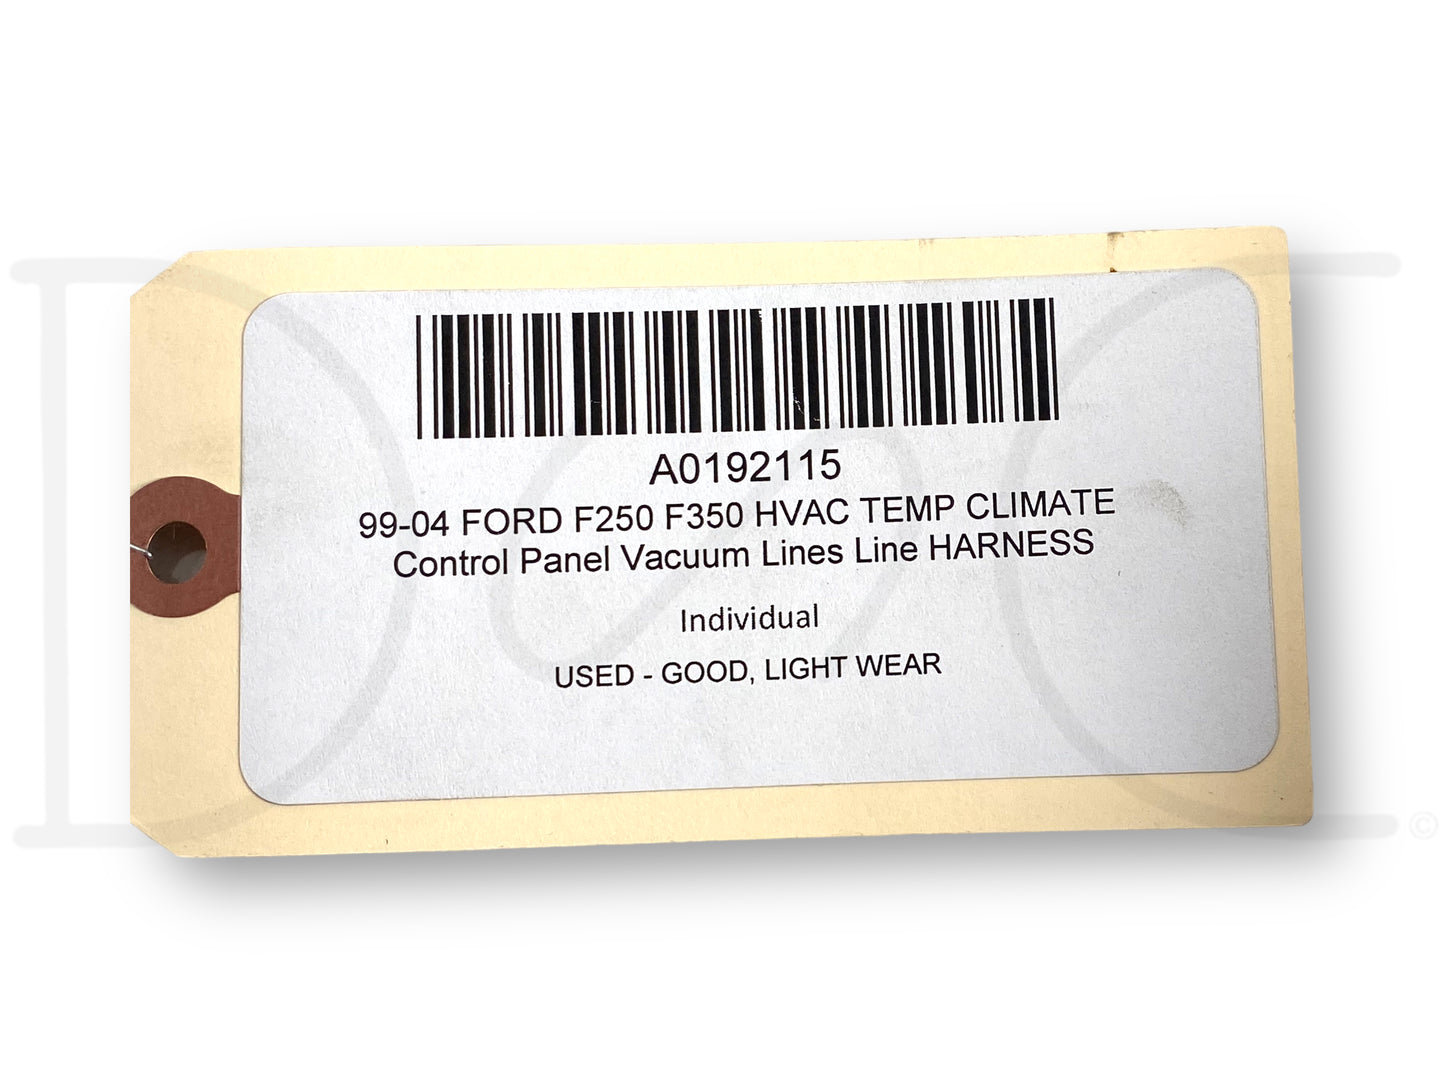 99-04 Ford F250 F350 HVAC Temp Climate Control Panel Vacuum Lines Line Harness